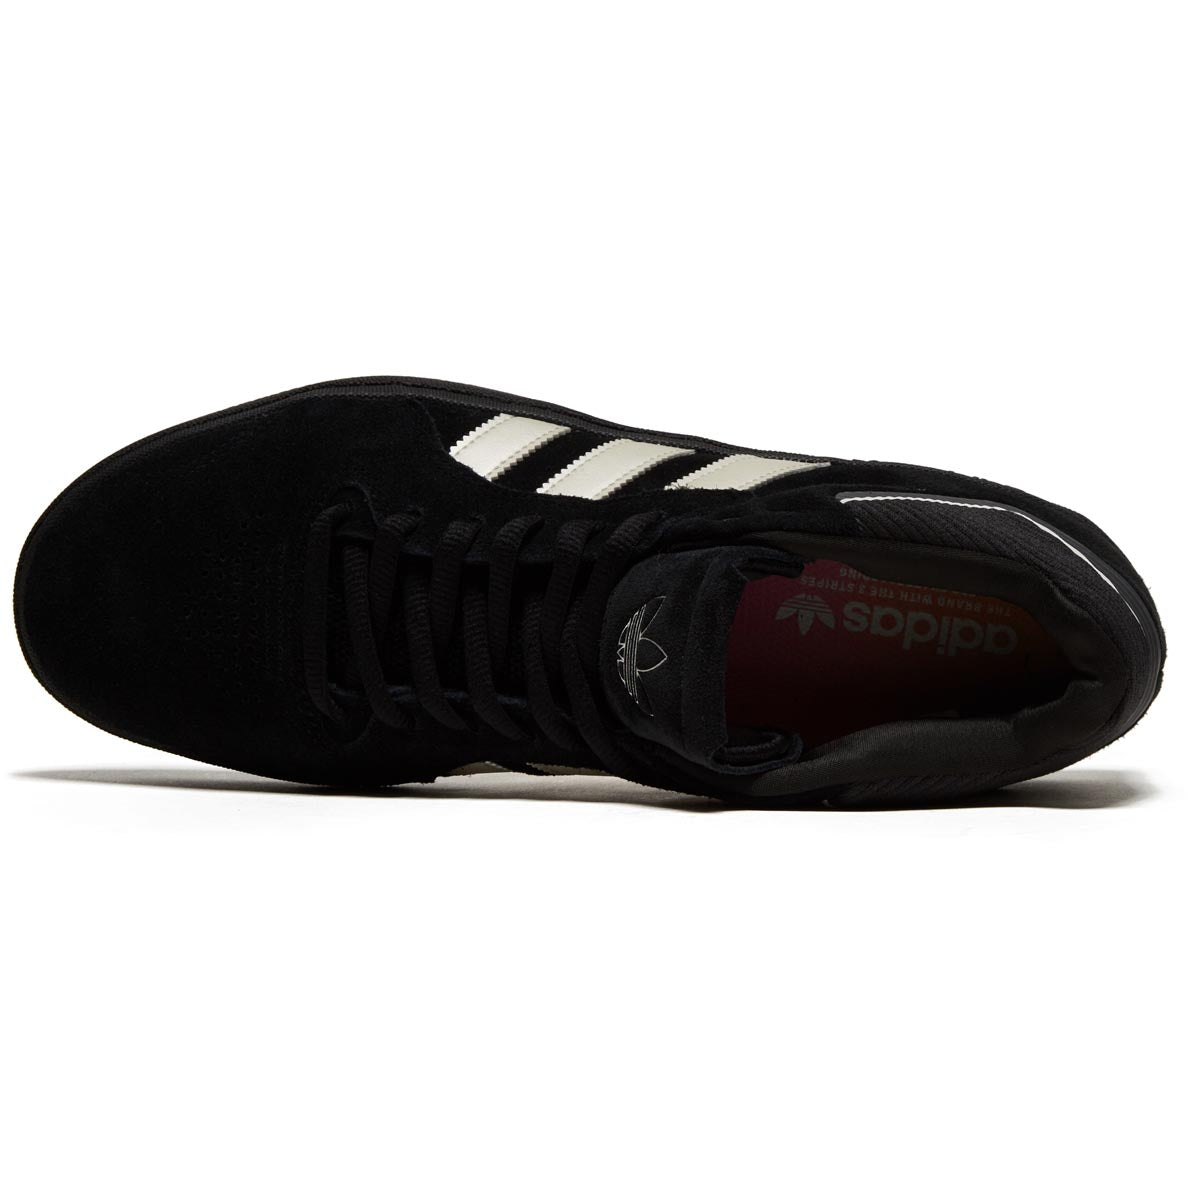 Adidas Tyshawn Shoes - Black/Metallic/Spark image 3